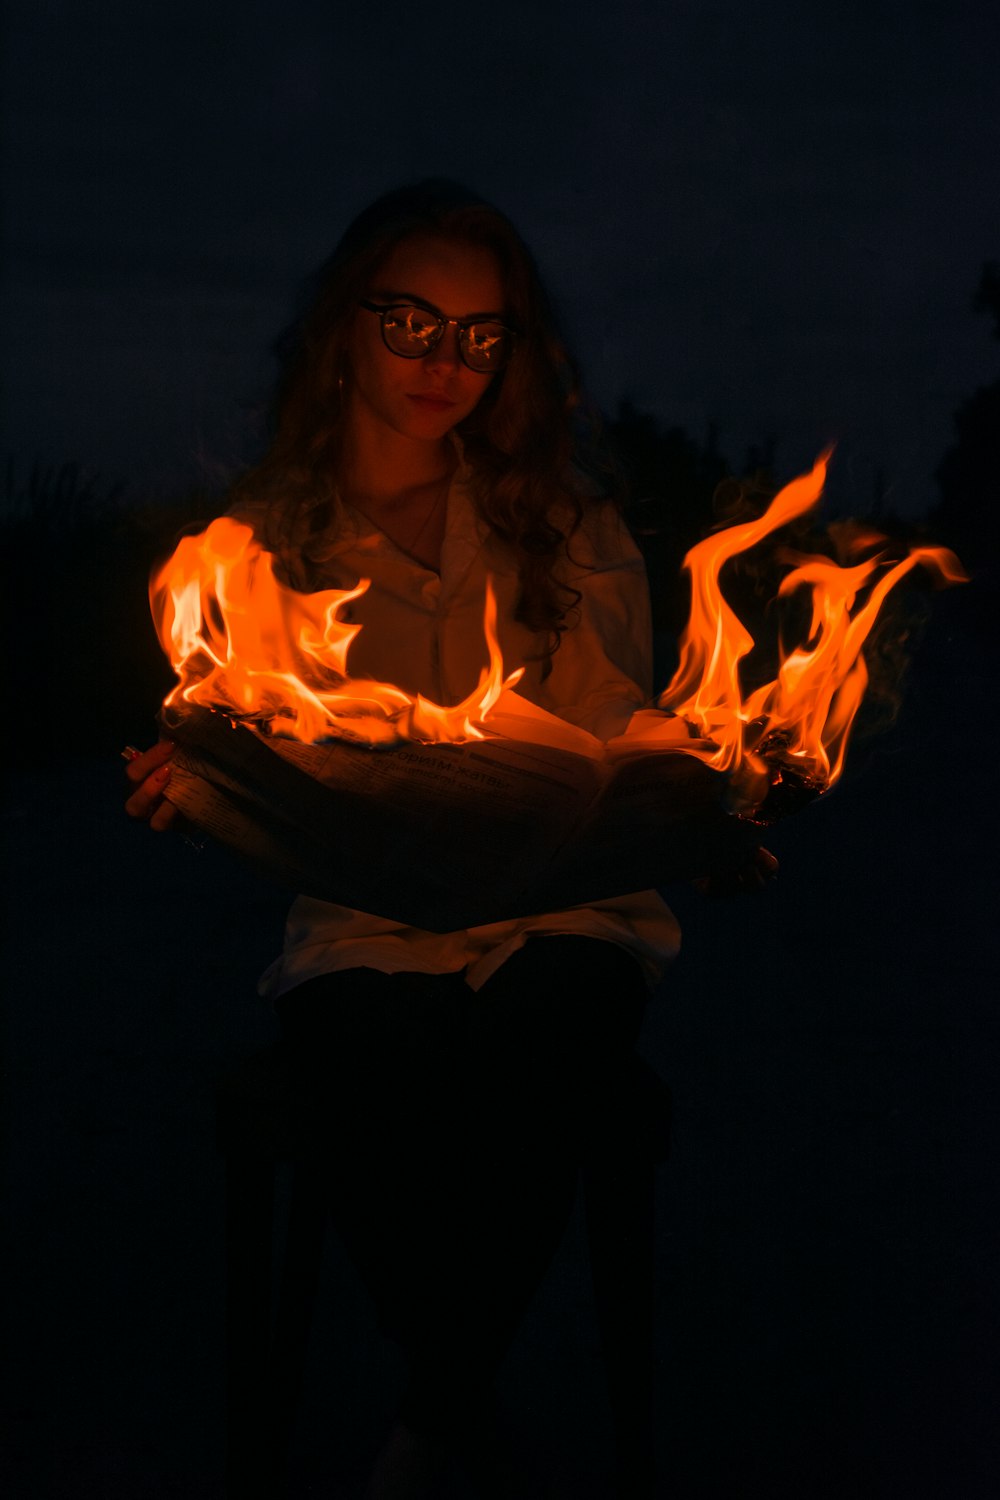 woman in black dress holding fire